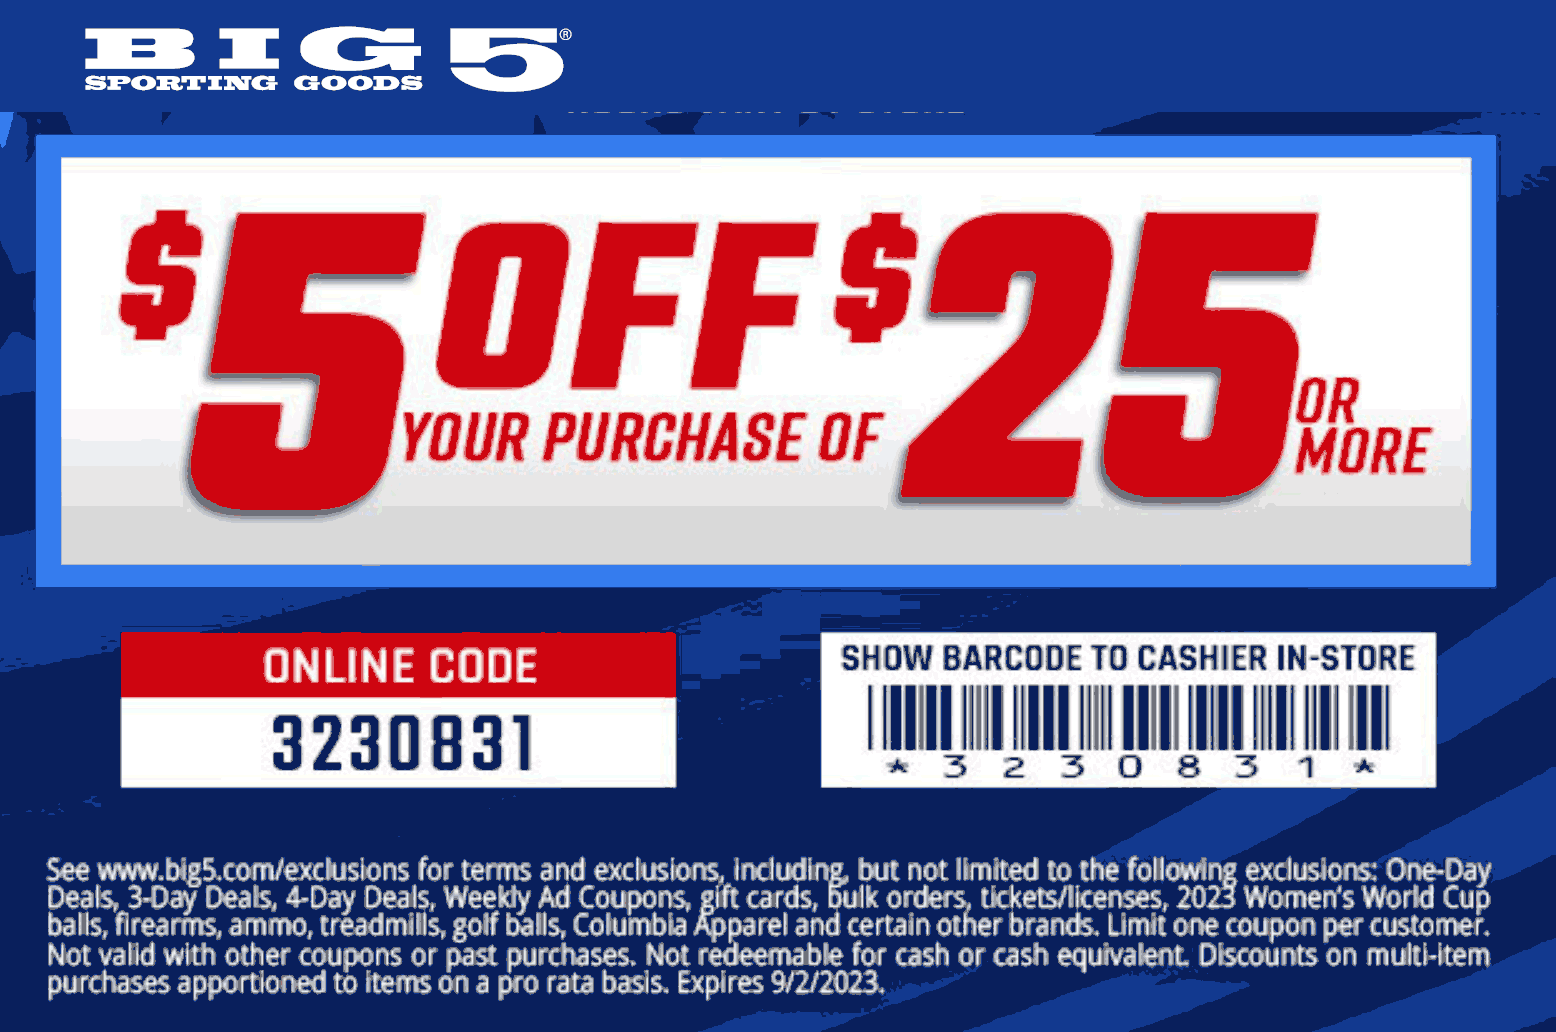 Big 5 stores Coupon  $5 off $25 at Big 5 sporting goods, or online via promo code 3230831 #big5 